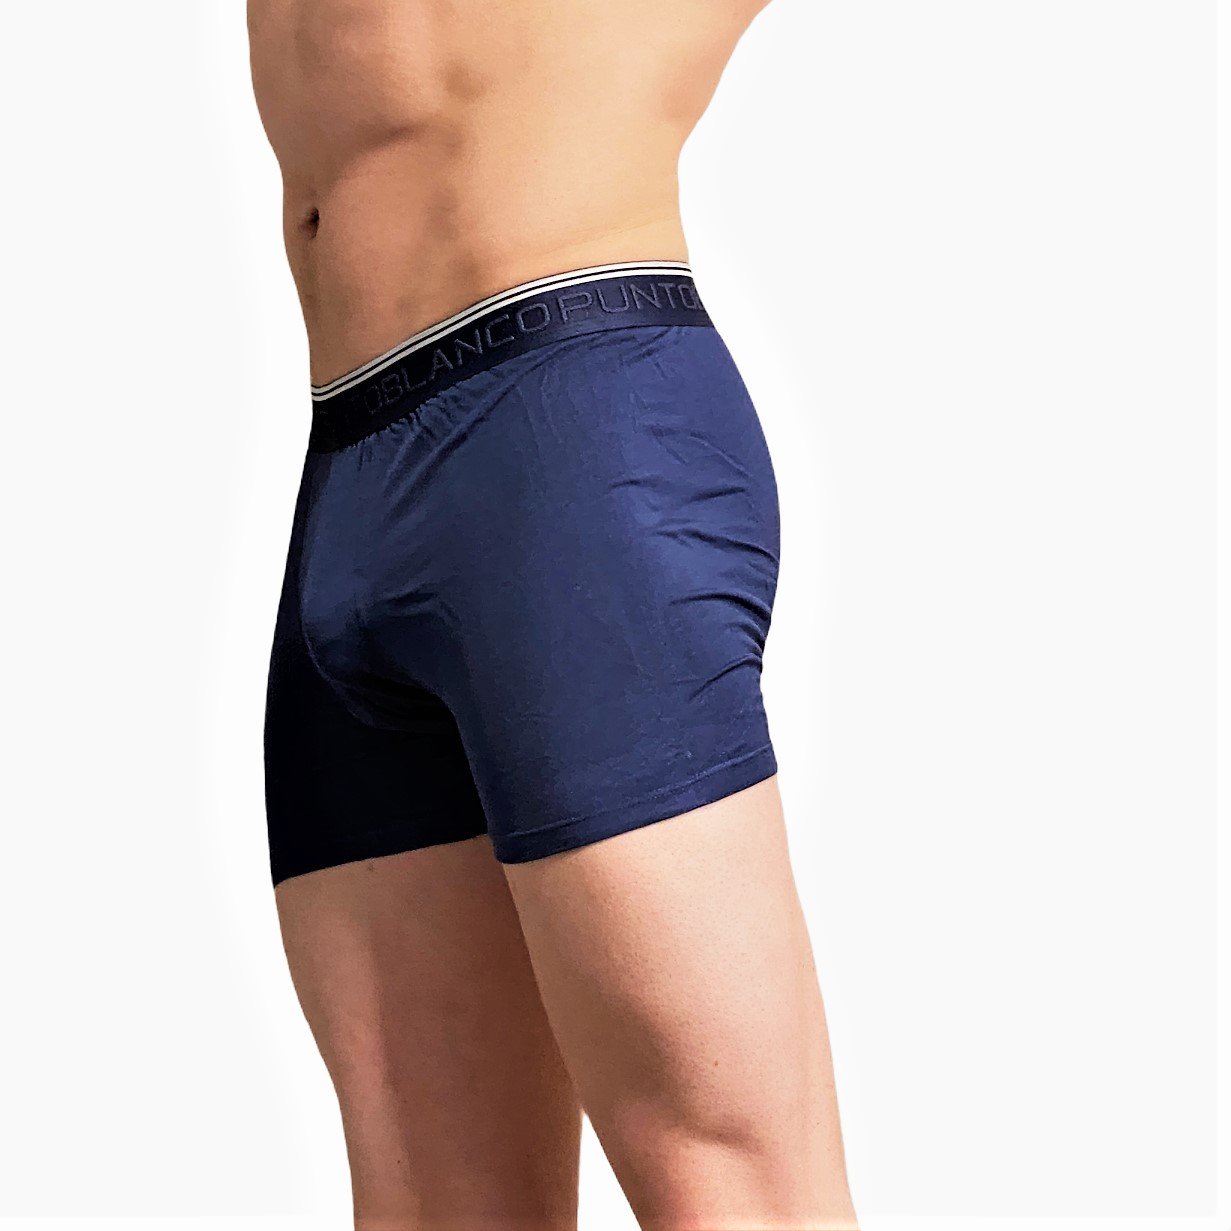 Elastic Duopack Brief soft waistband, high waist